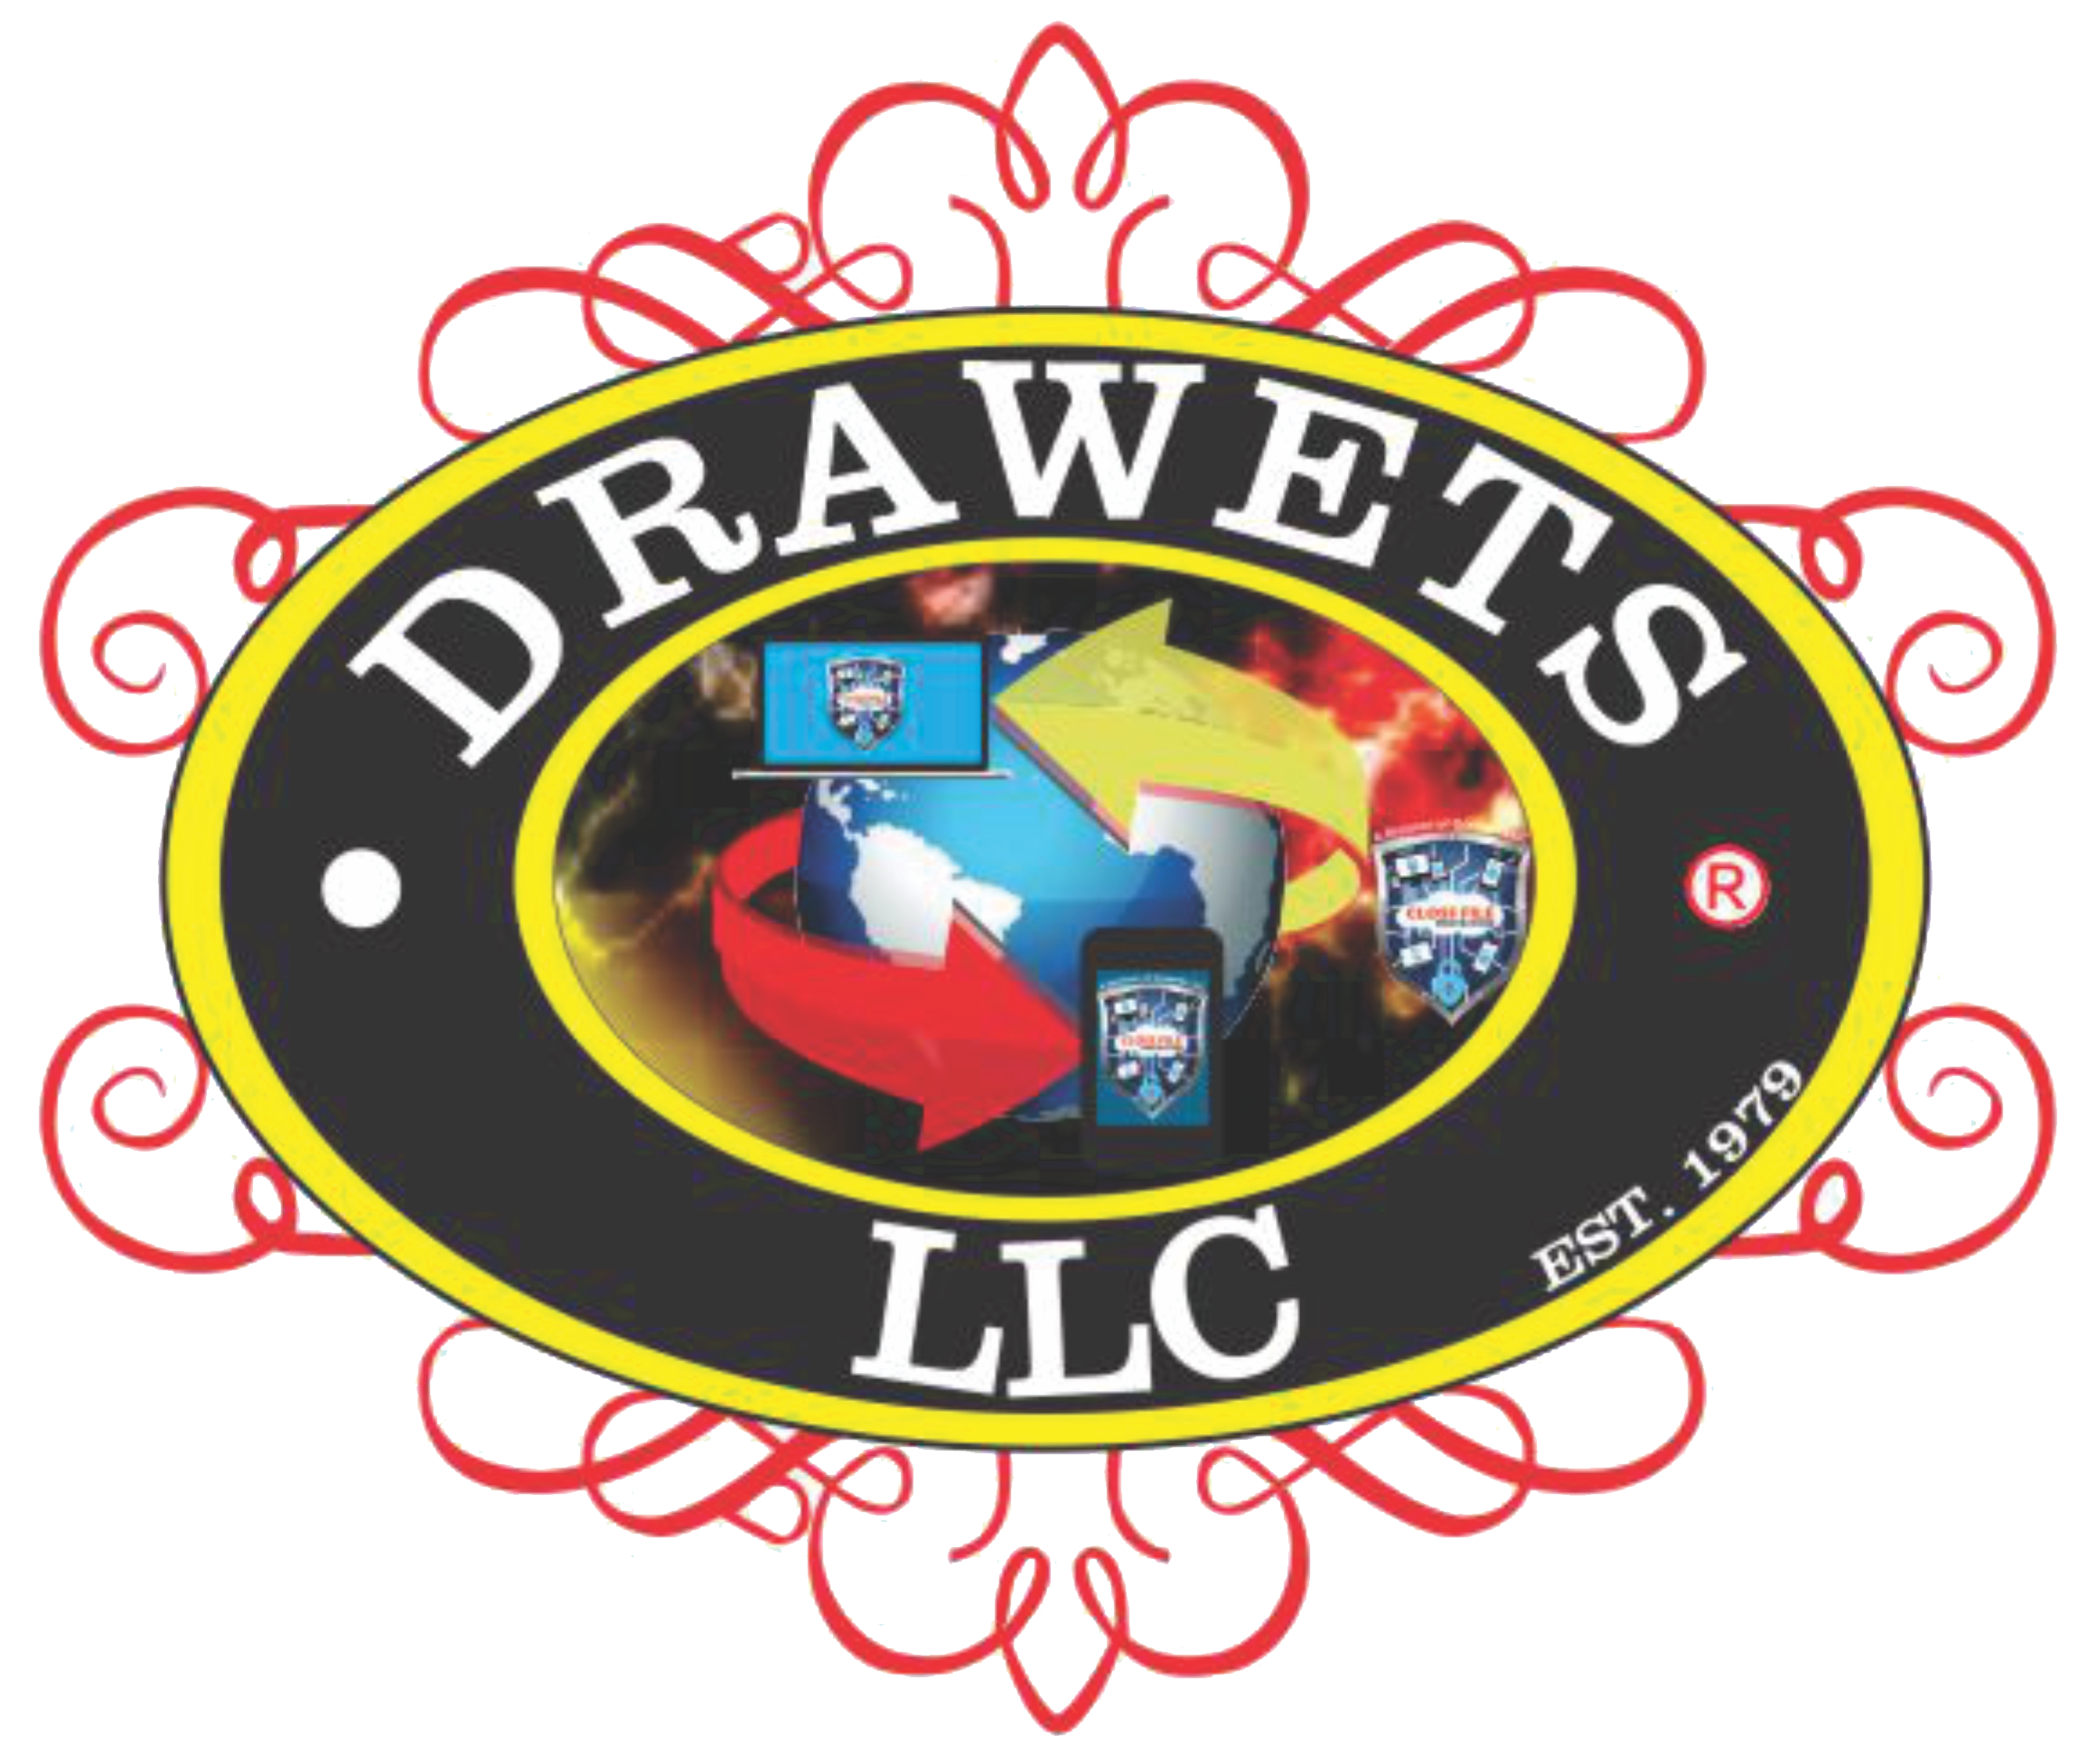 Drawets LLC